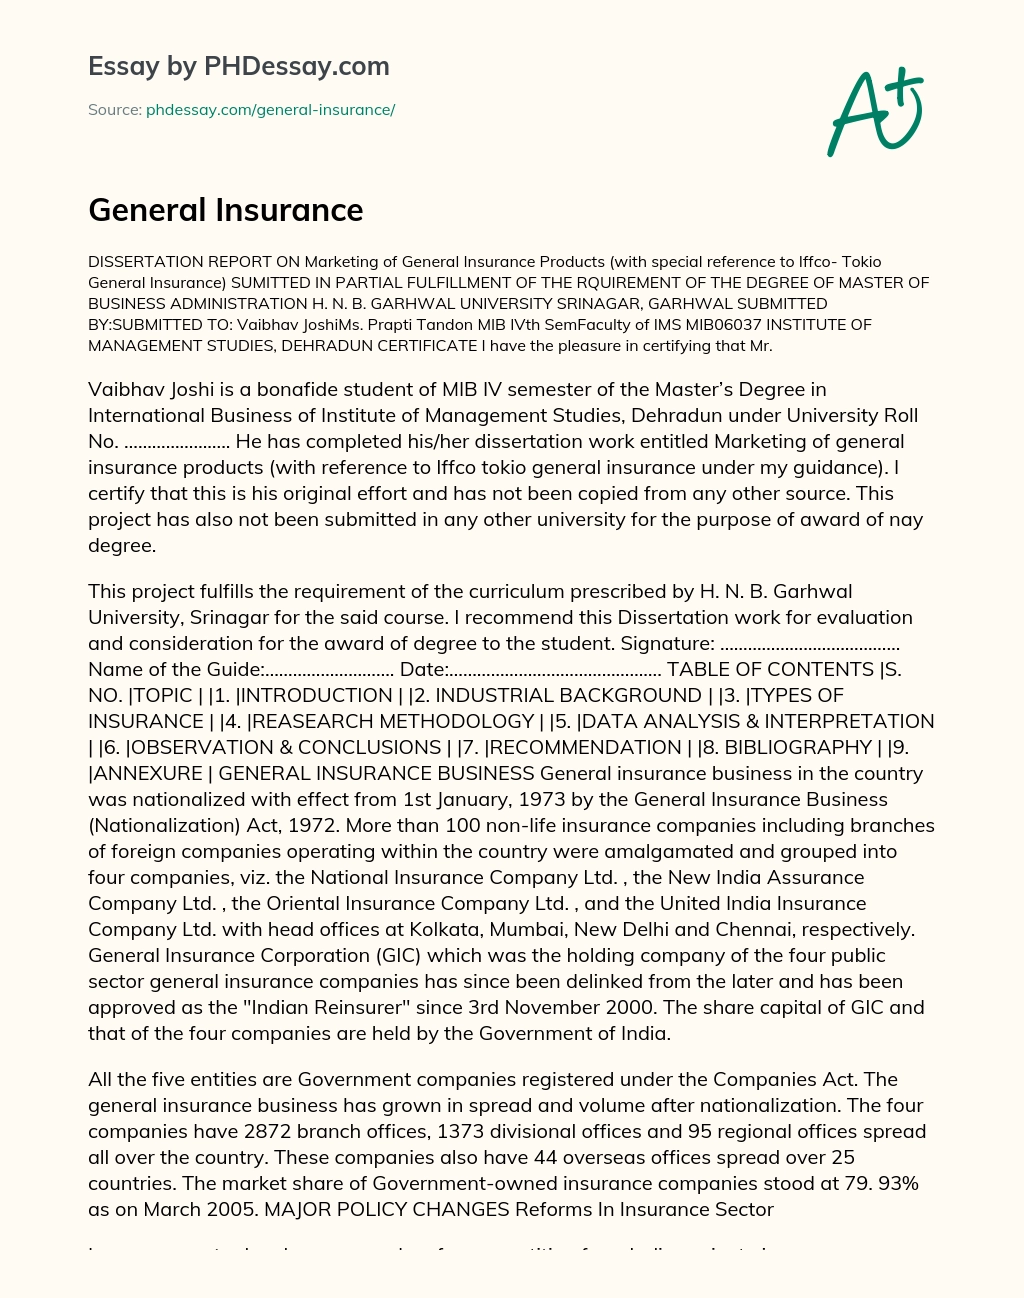 General Insurance essay